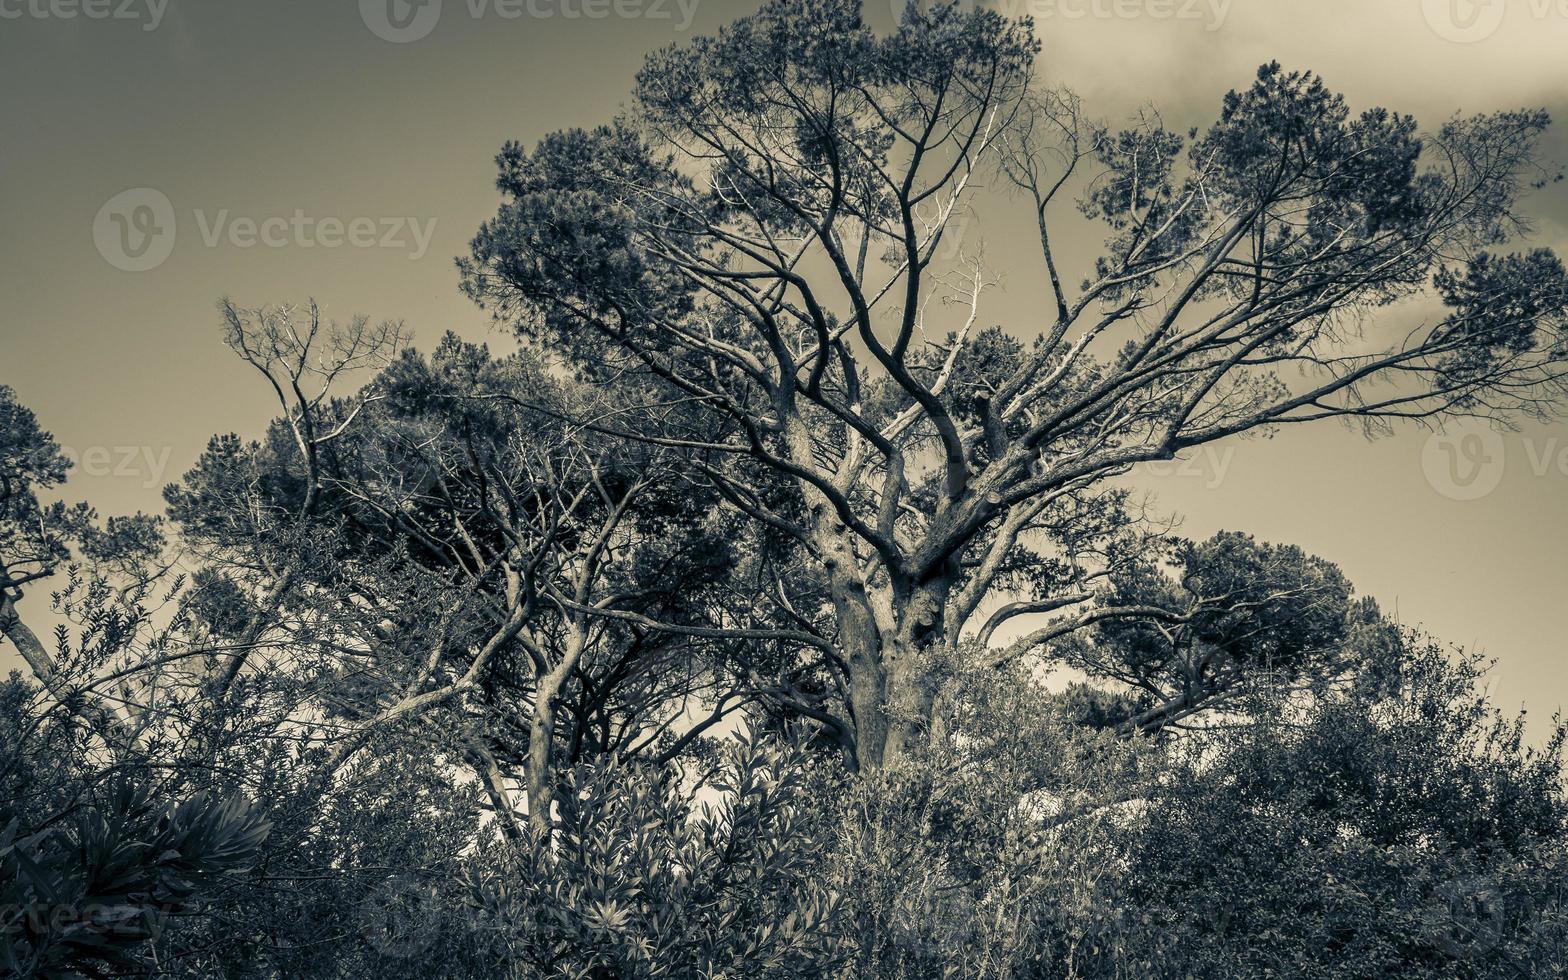 Huge South African trees in Kirstenbosch Botanical Garden, Cape Town. photo